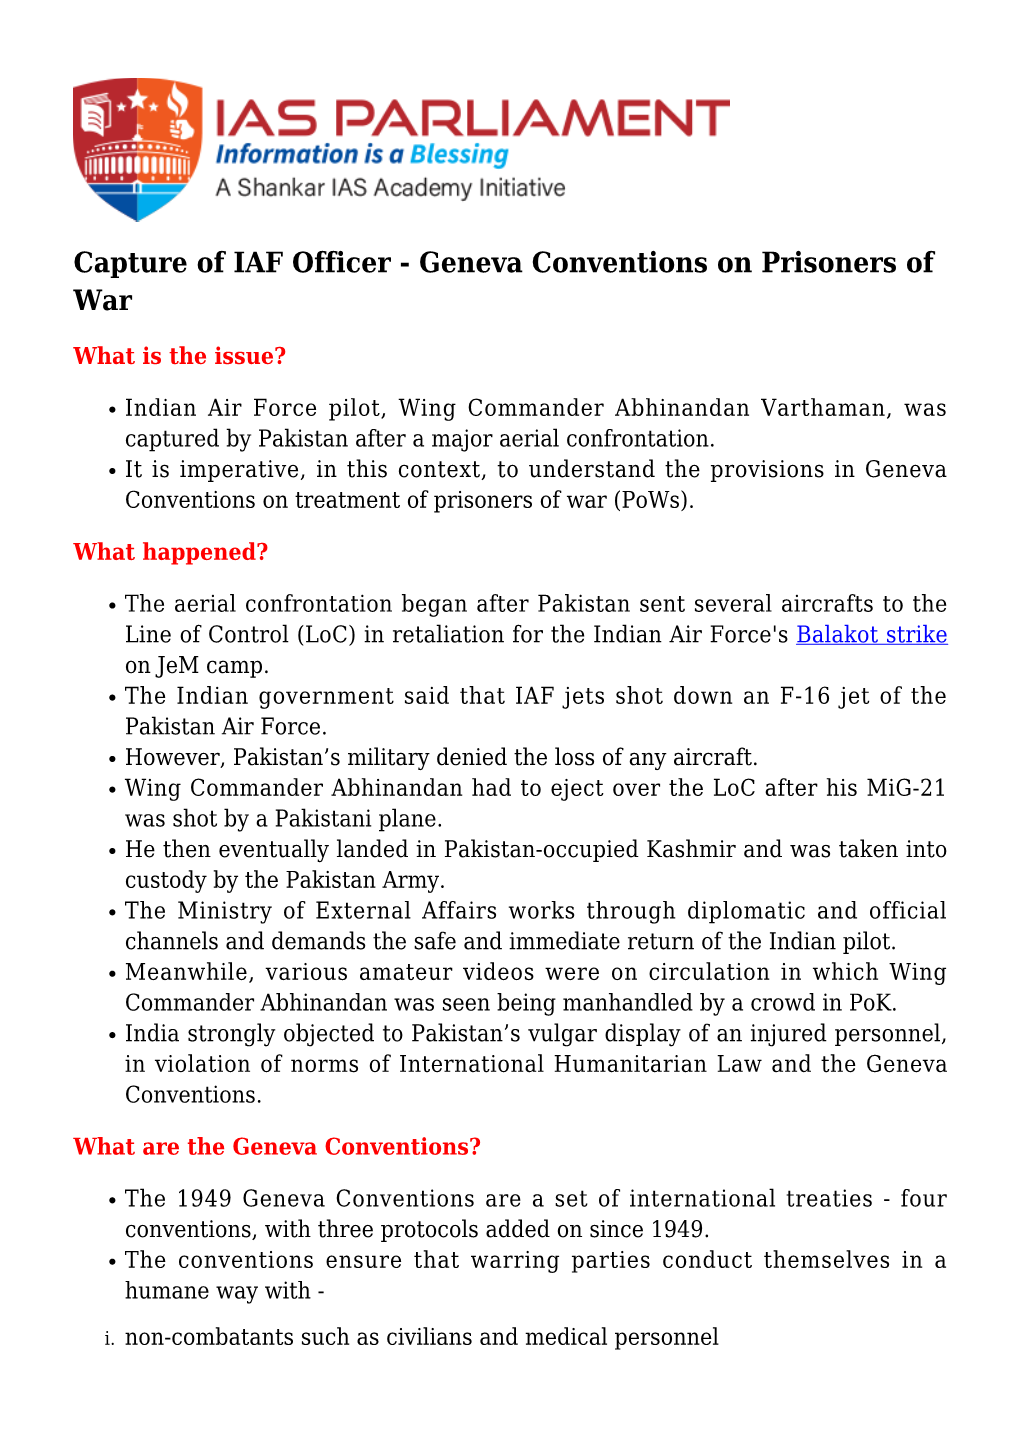 Capture of IAF Officer - Geneva Conventions on Prisoners of War